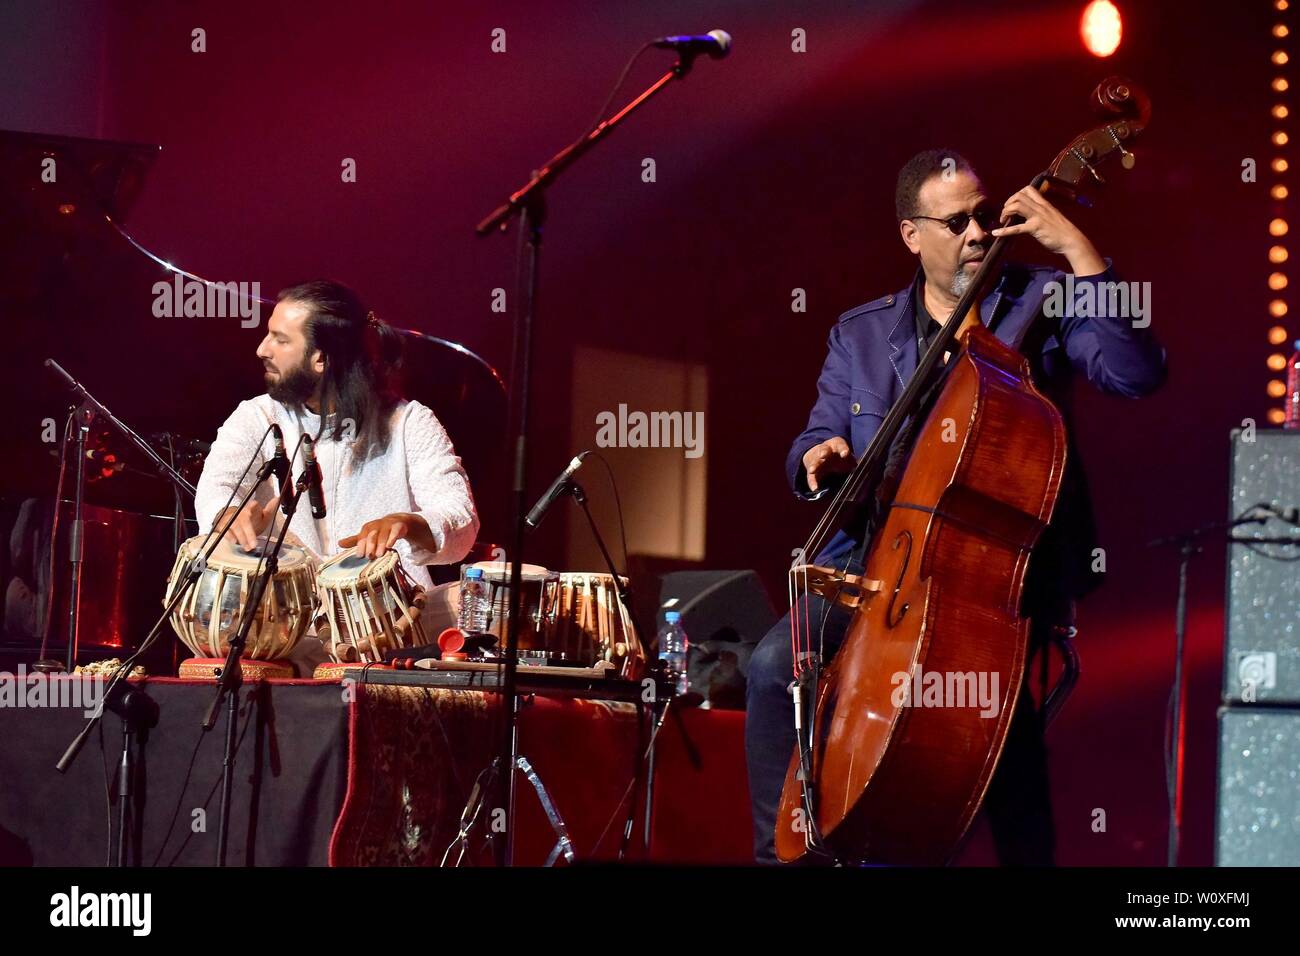 Rabat. 28th June, 2019. Artists perform during the 2019 Mawazine Festival in Rabat, Morocco, June 27, 2019. Credit: Xinhua/Alamy Live News Stock Photo